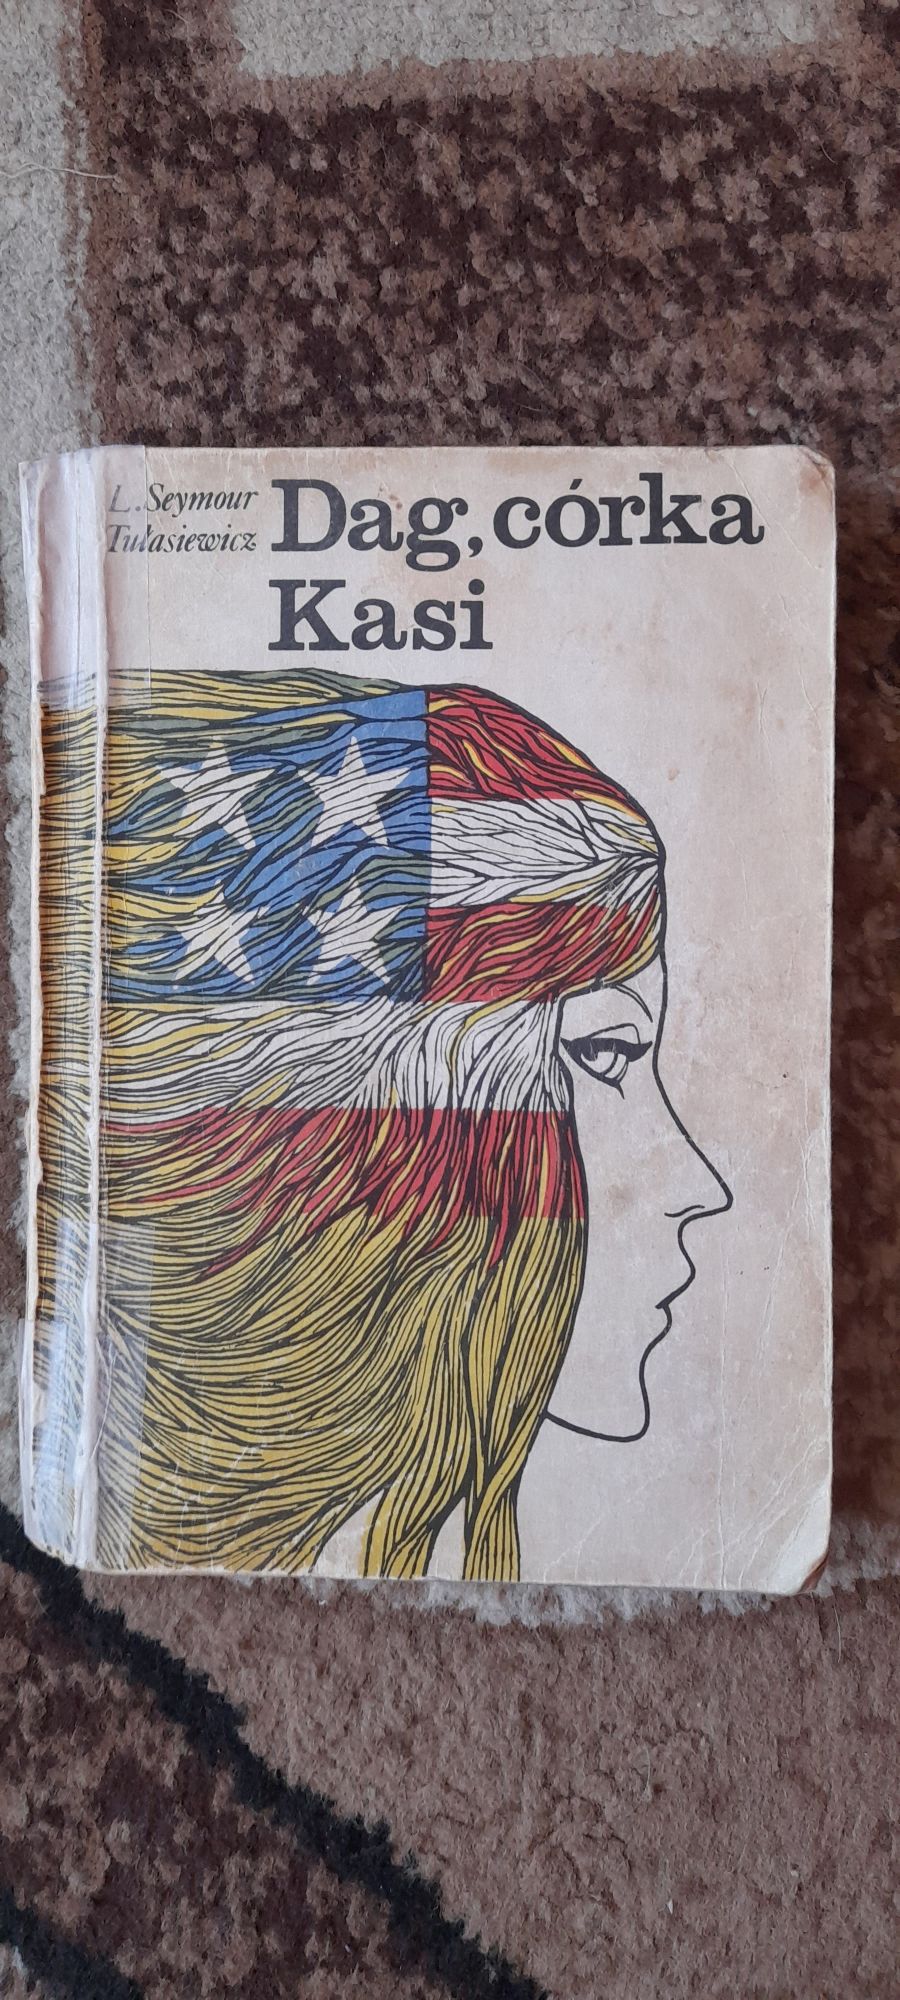 Dag, córka Kasi - L. Seymur Tułasiewicz wyd VII 1973